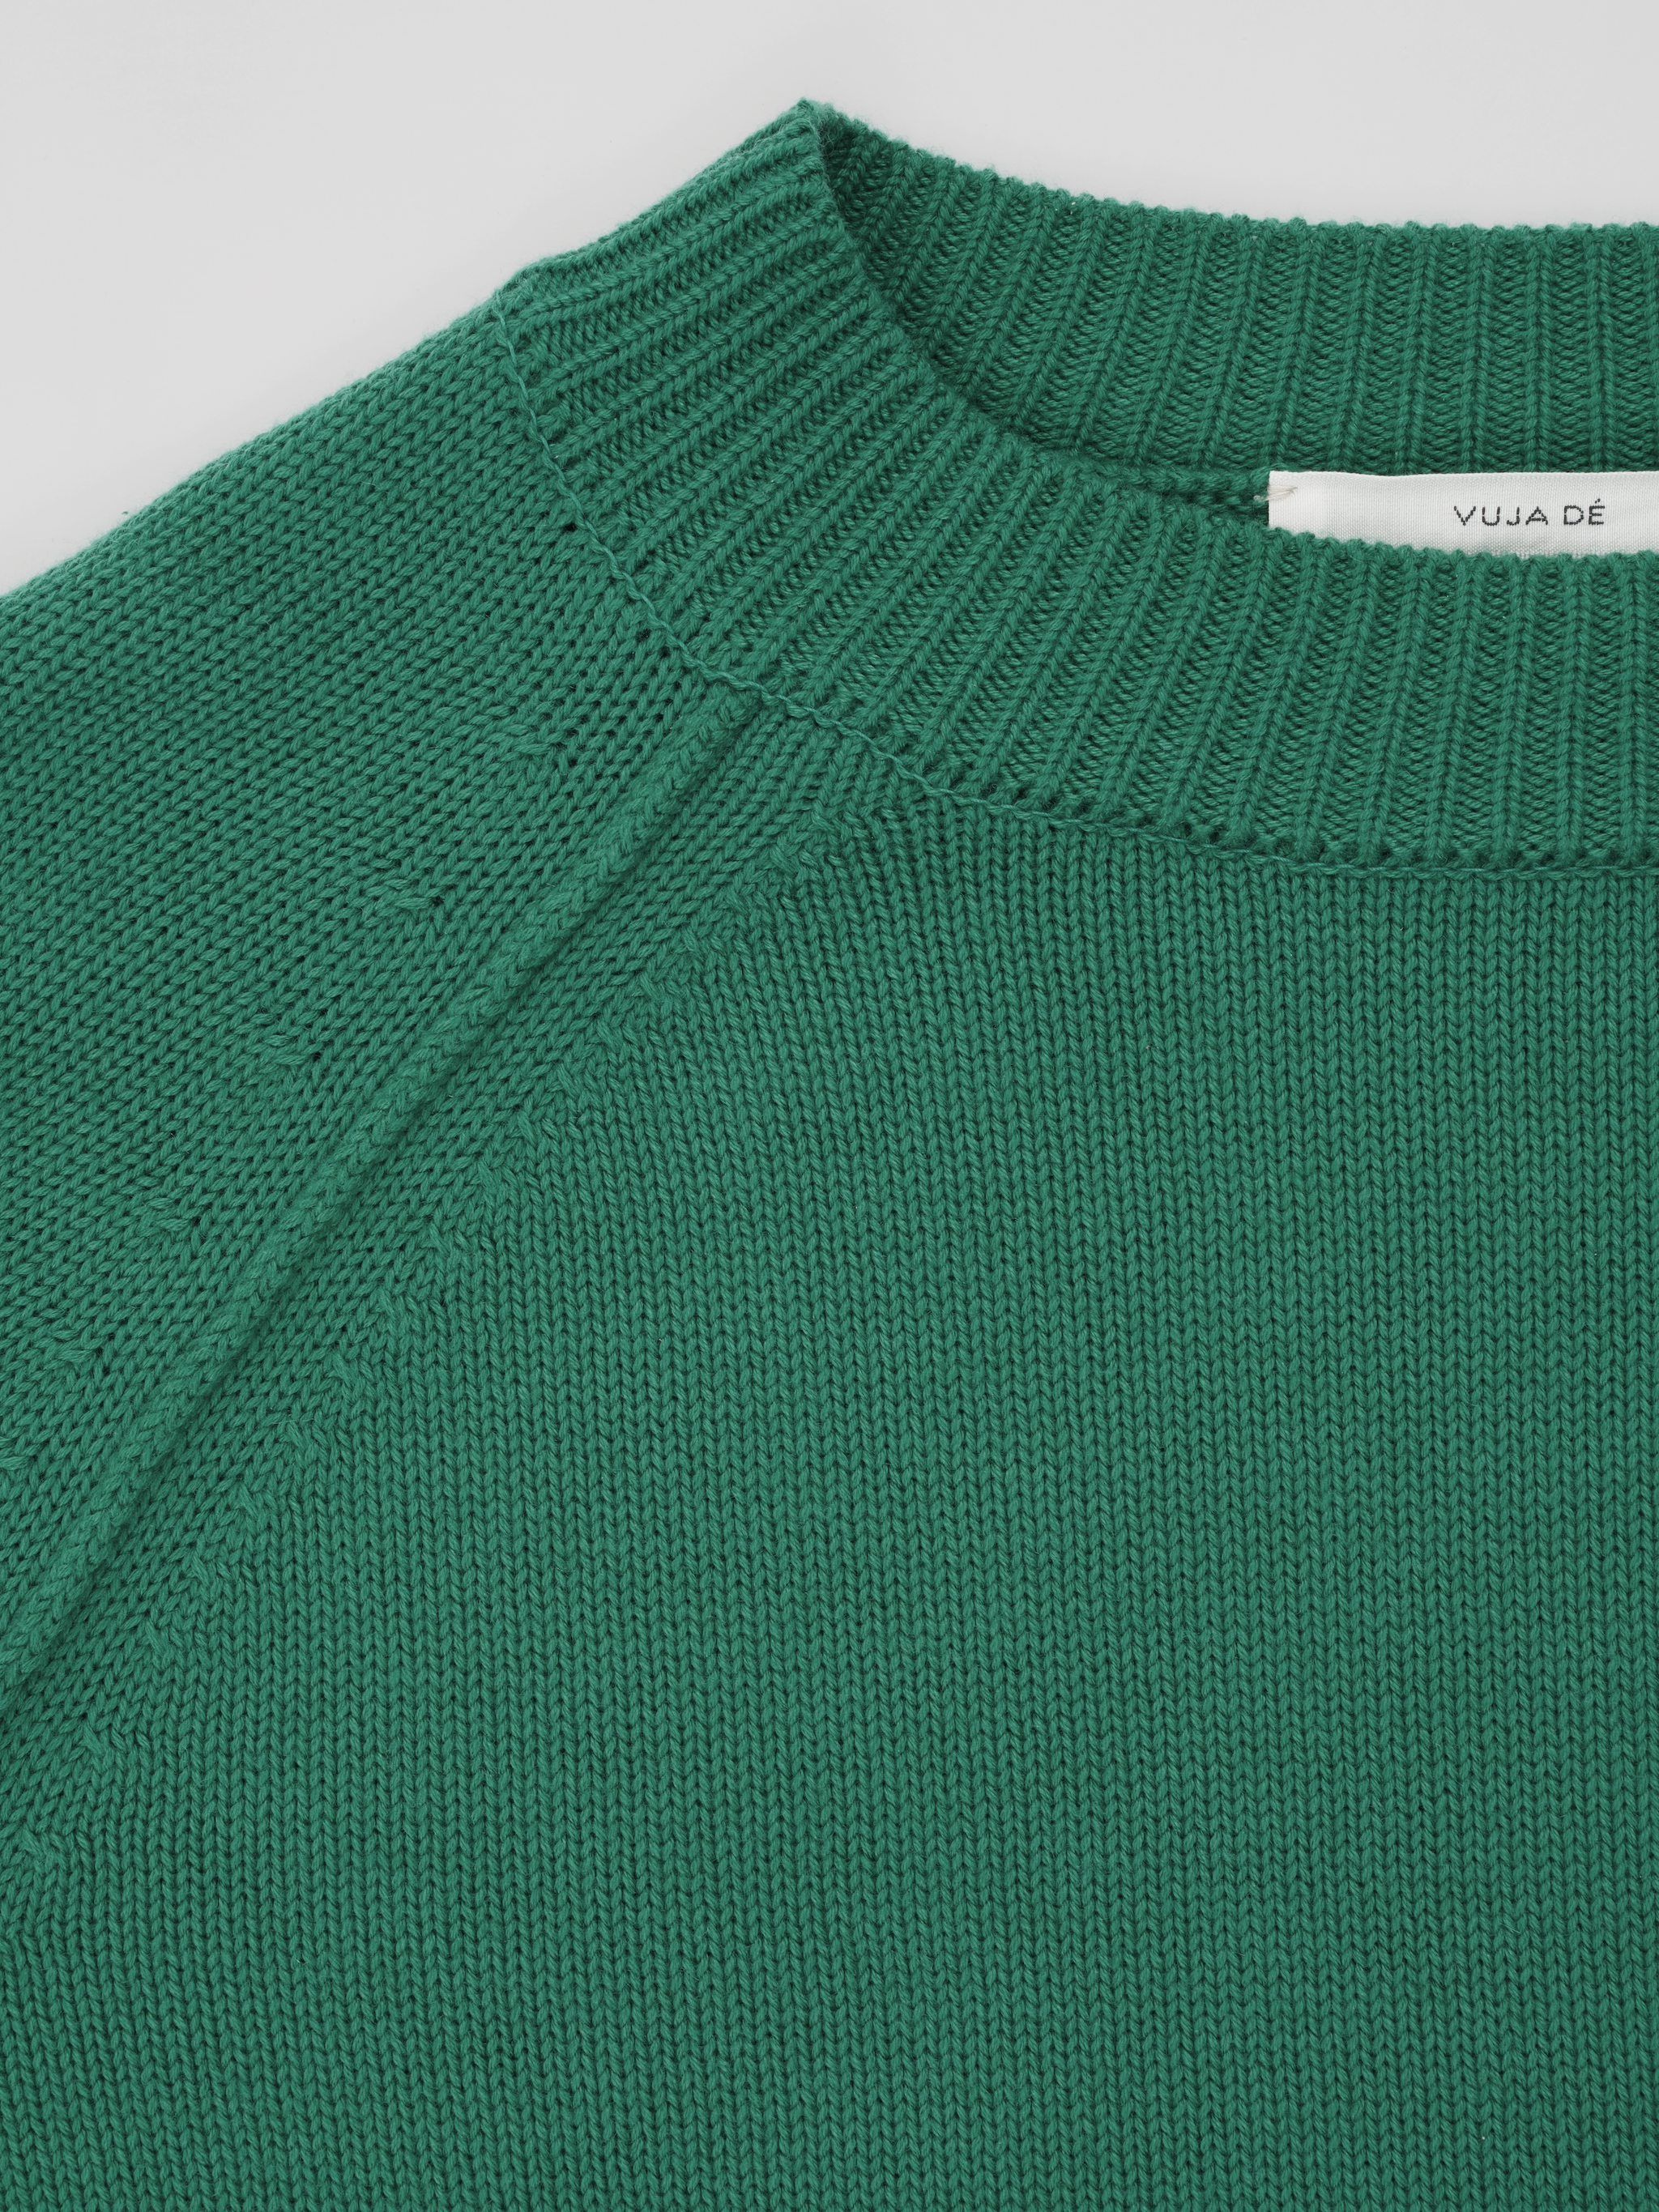 The “Piege” Cashmere Blend Sweater in Napier green – VUJA DÉ